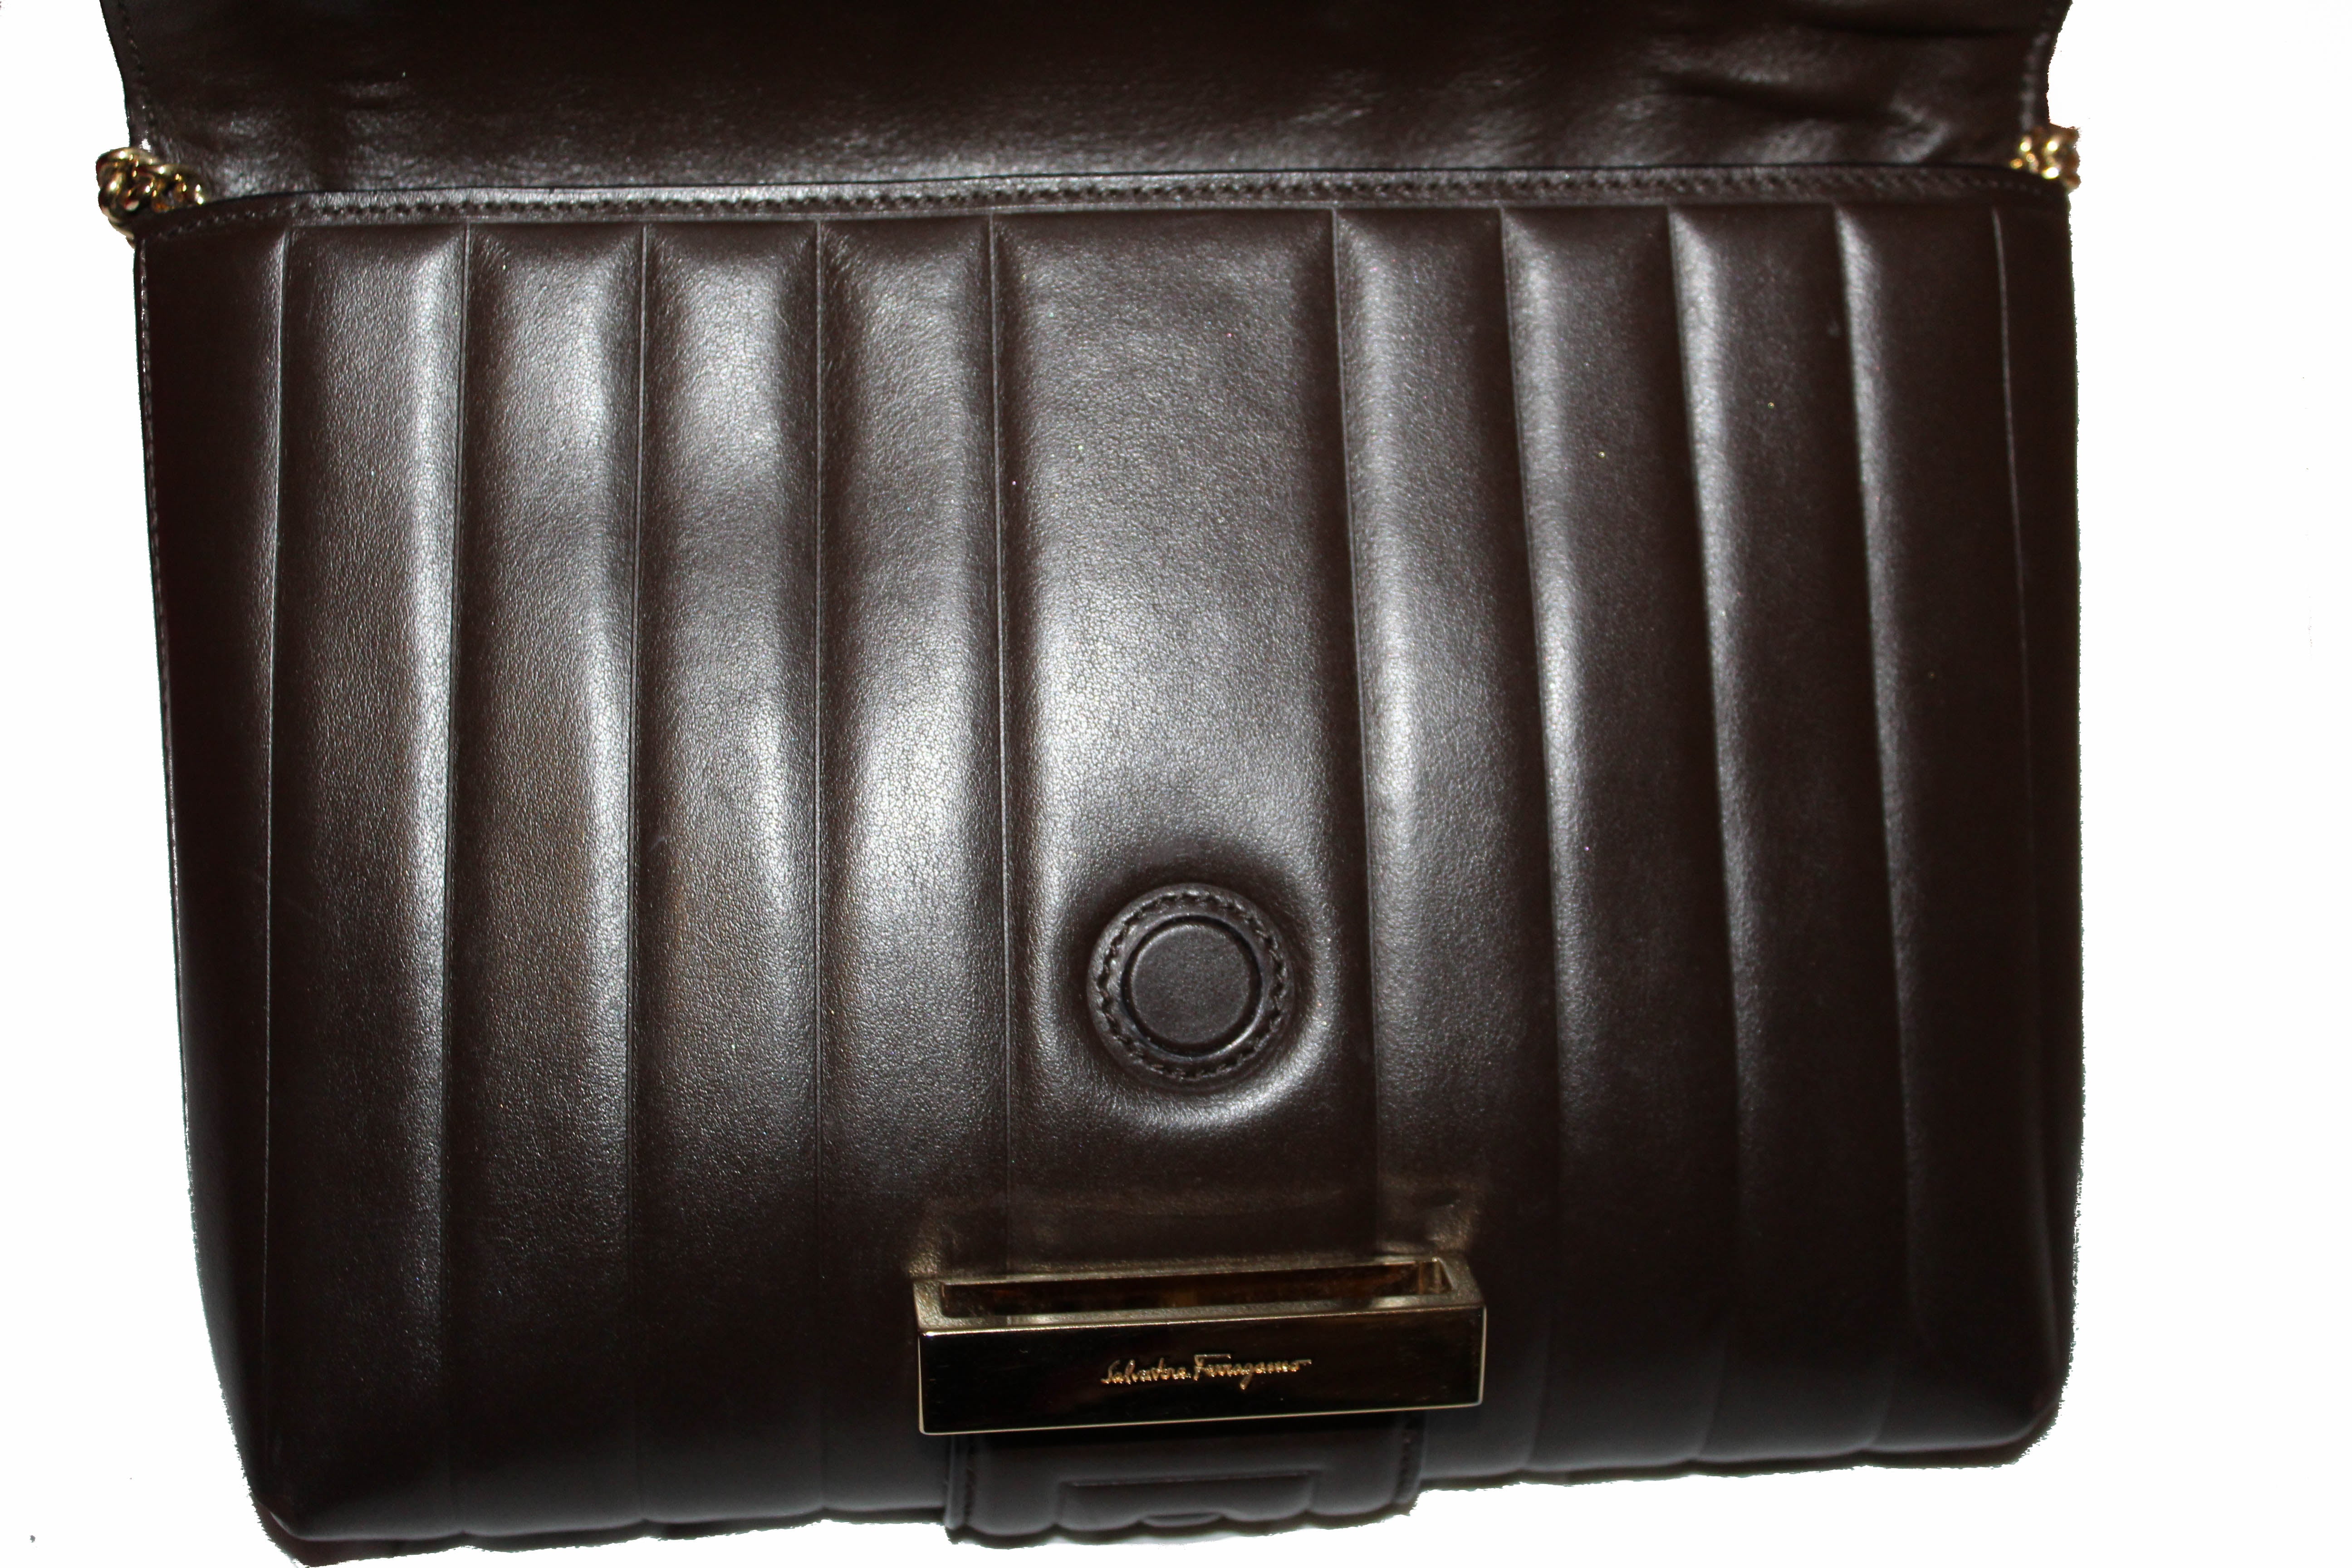 Authentic Salvatore Ferragamo Dark Brown Quilted Leather Clutch/Shoulder Bag